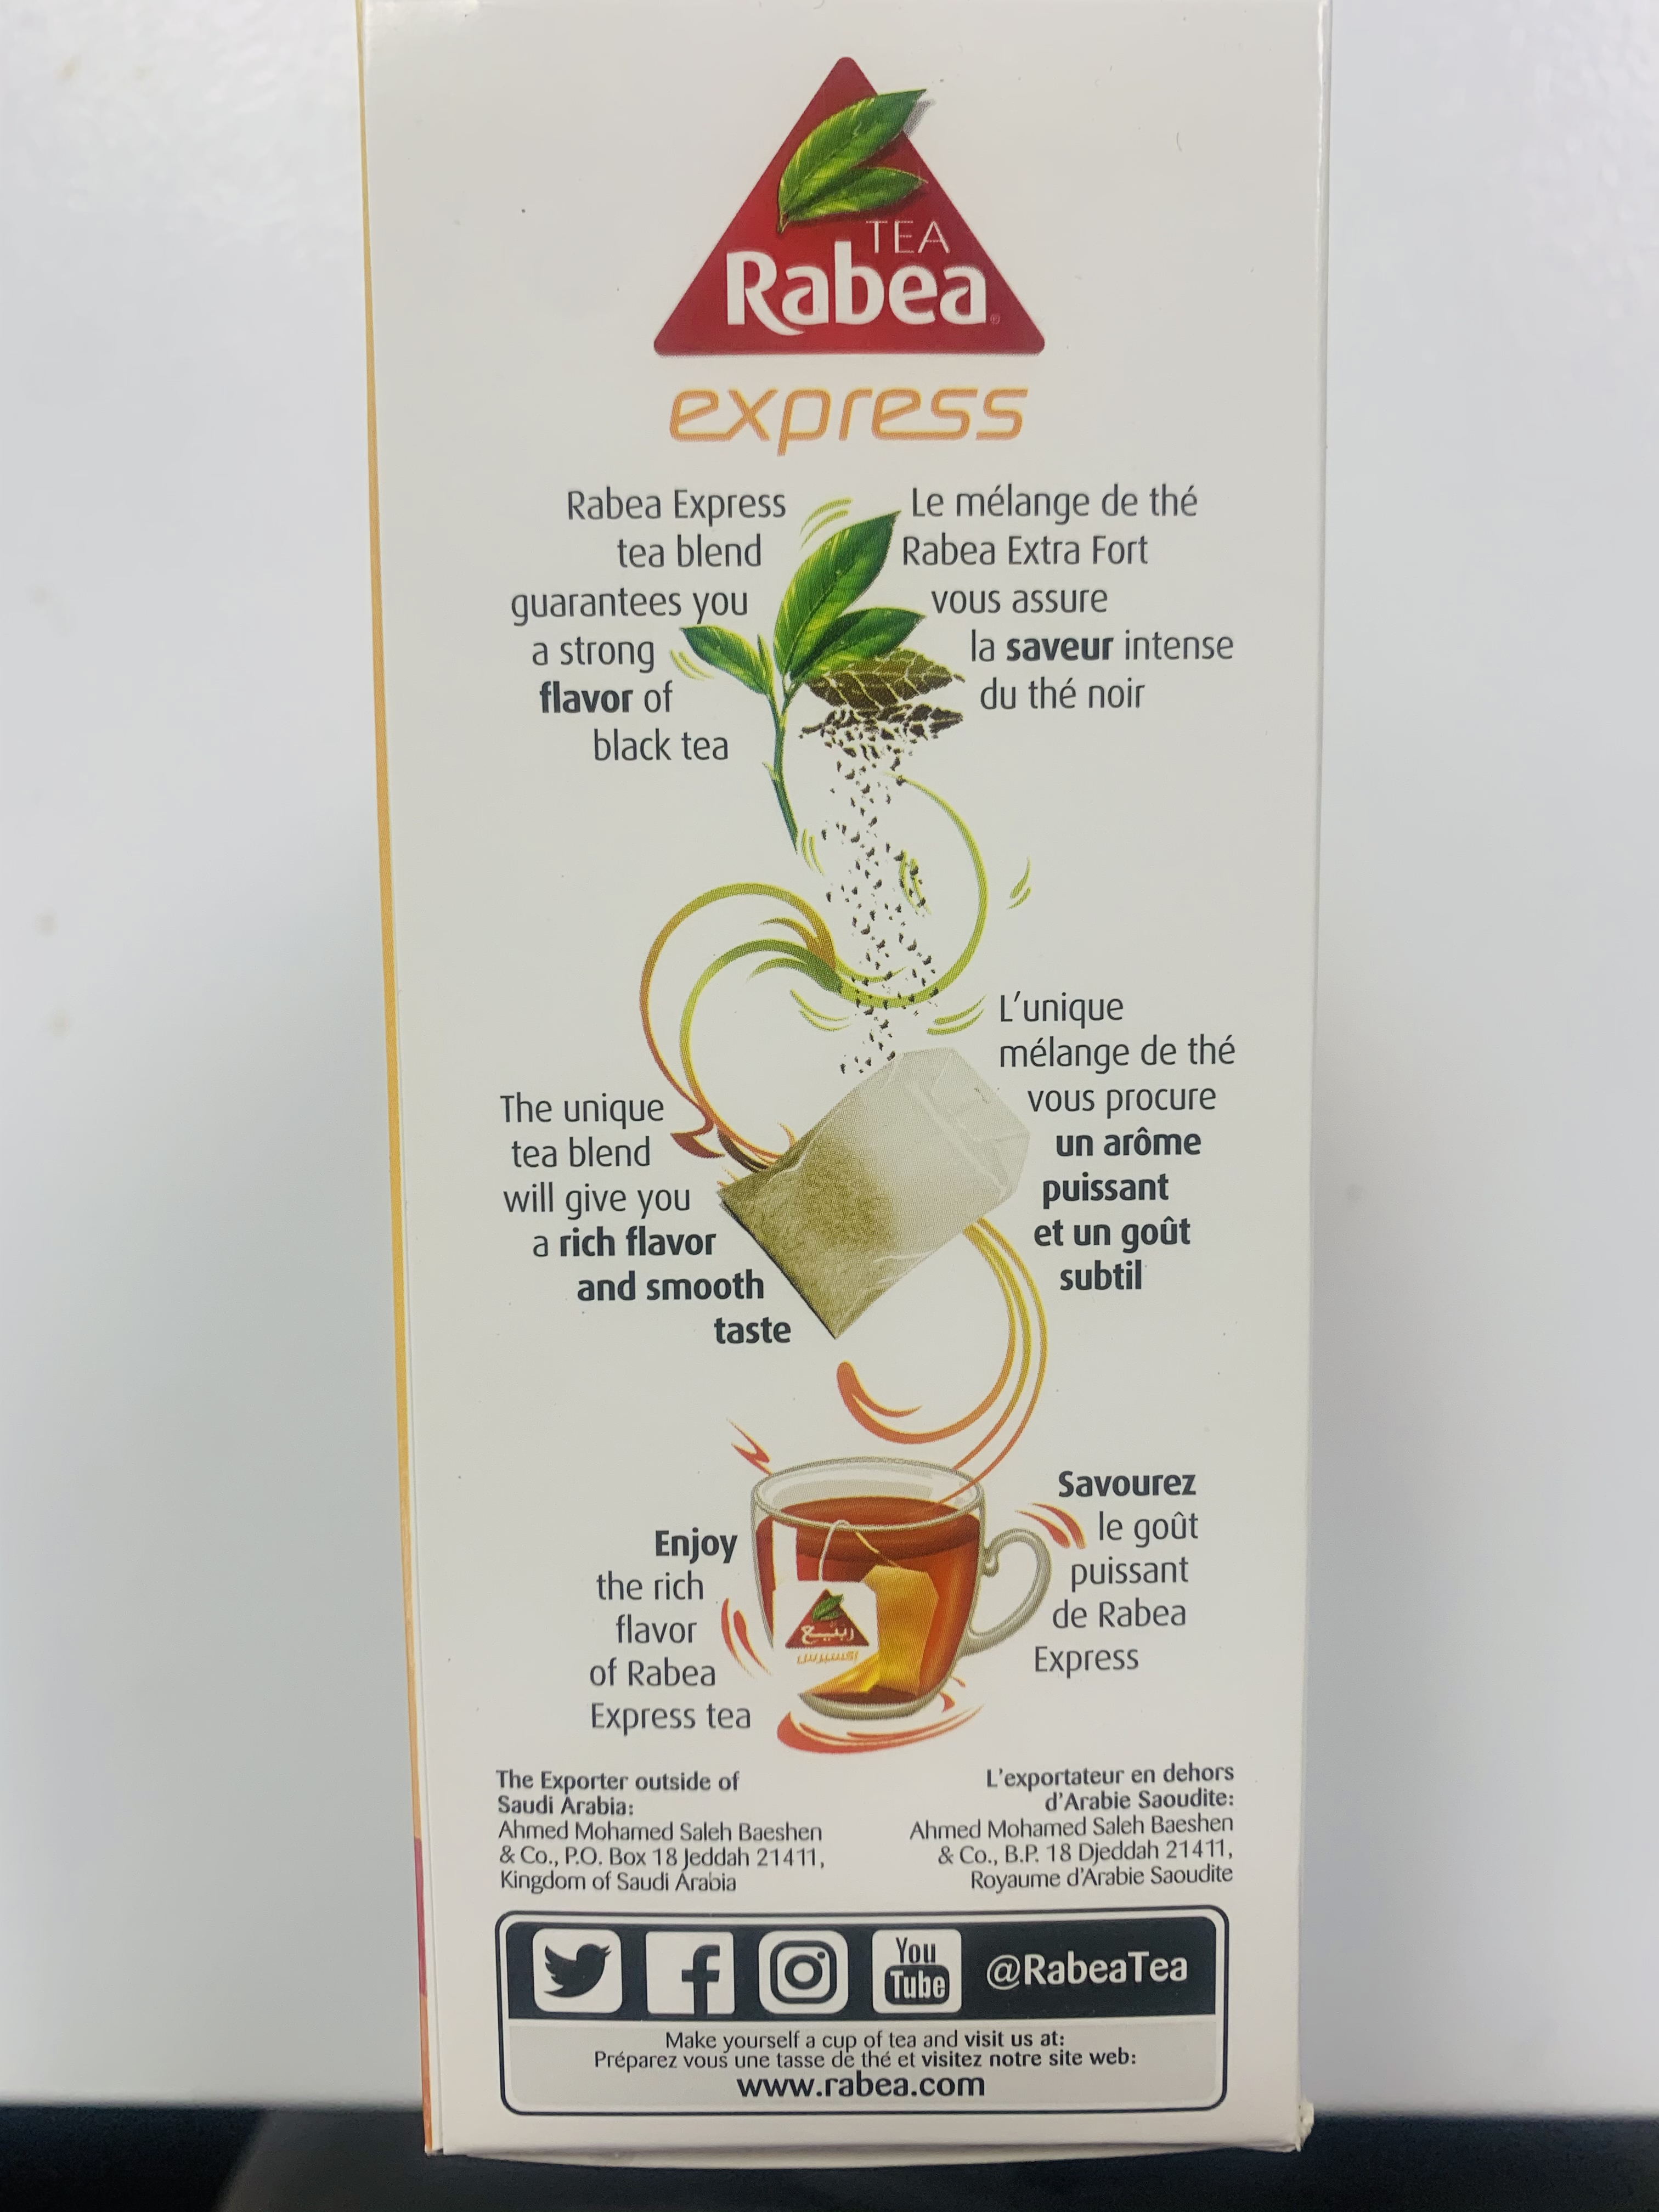 Rabea Tea - Express <br>5.99$